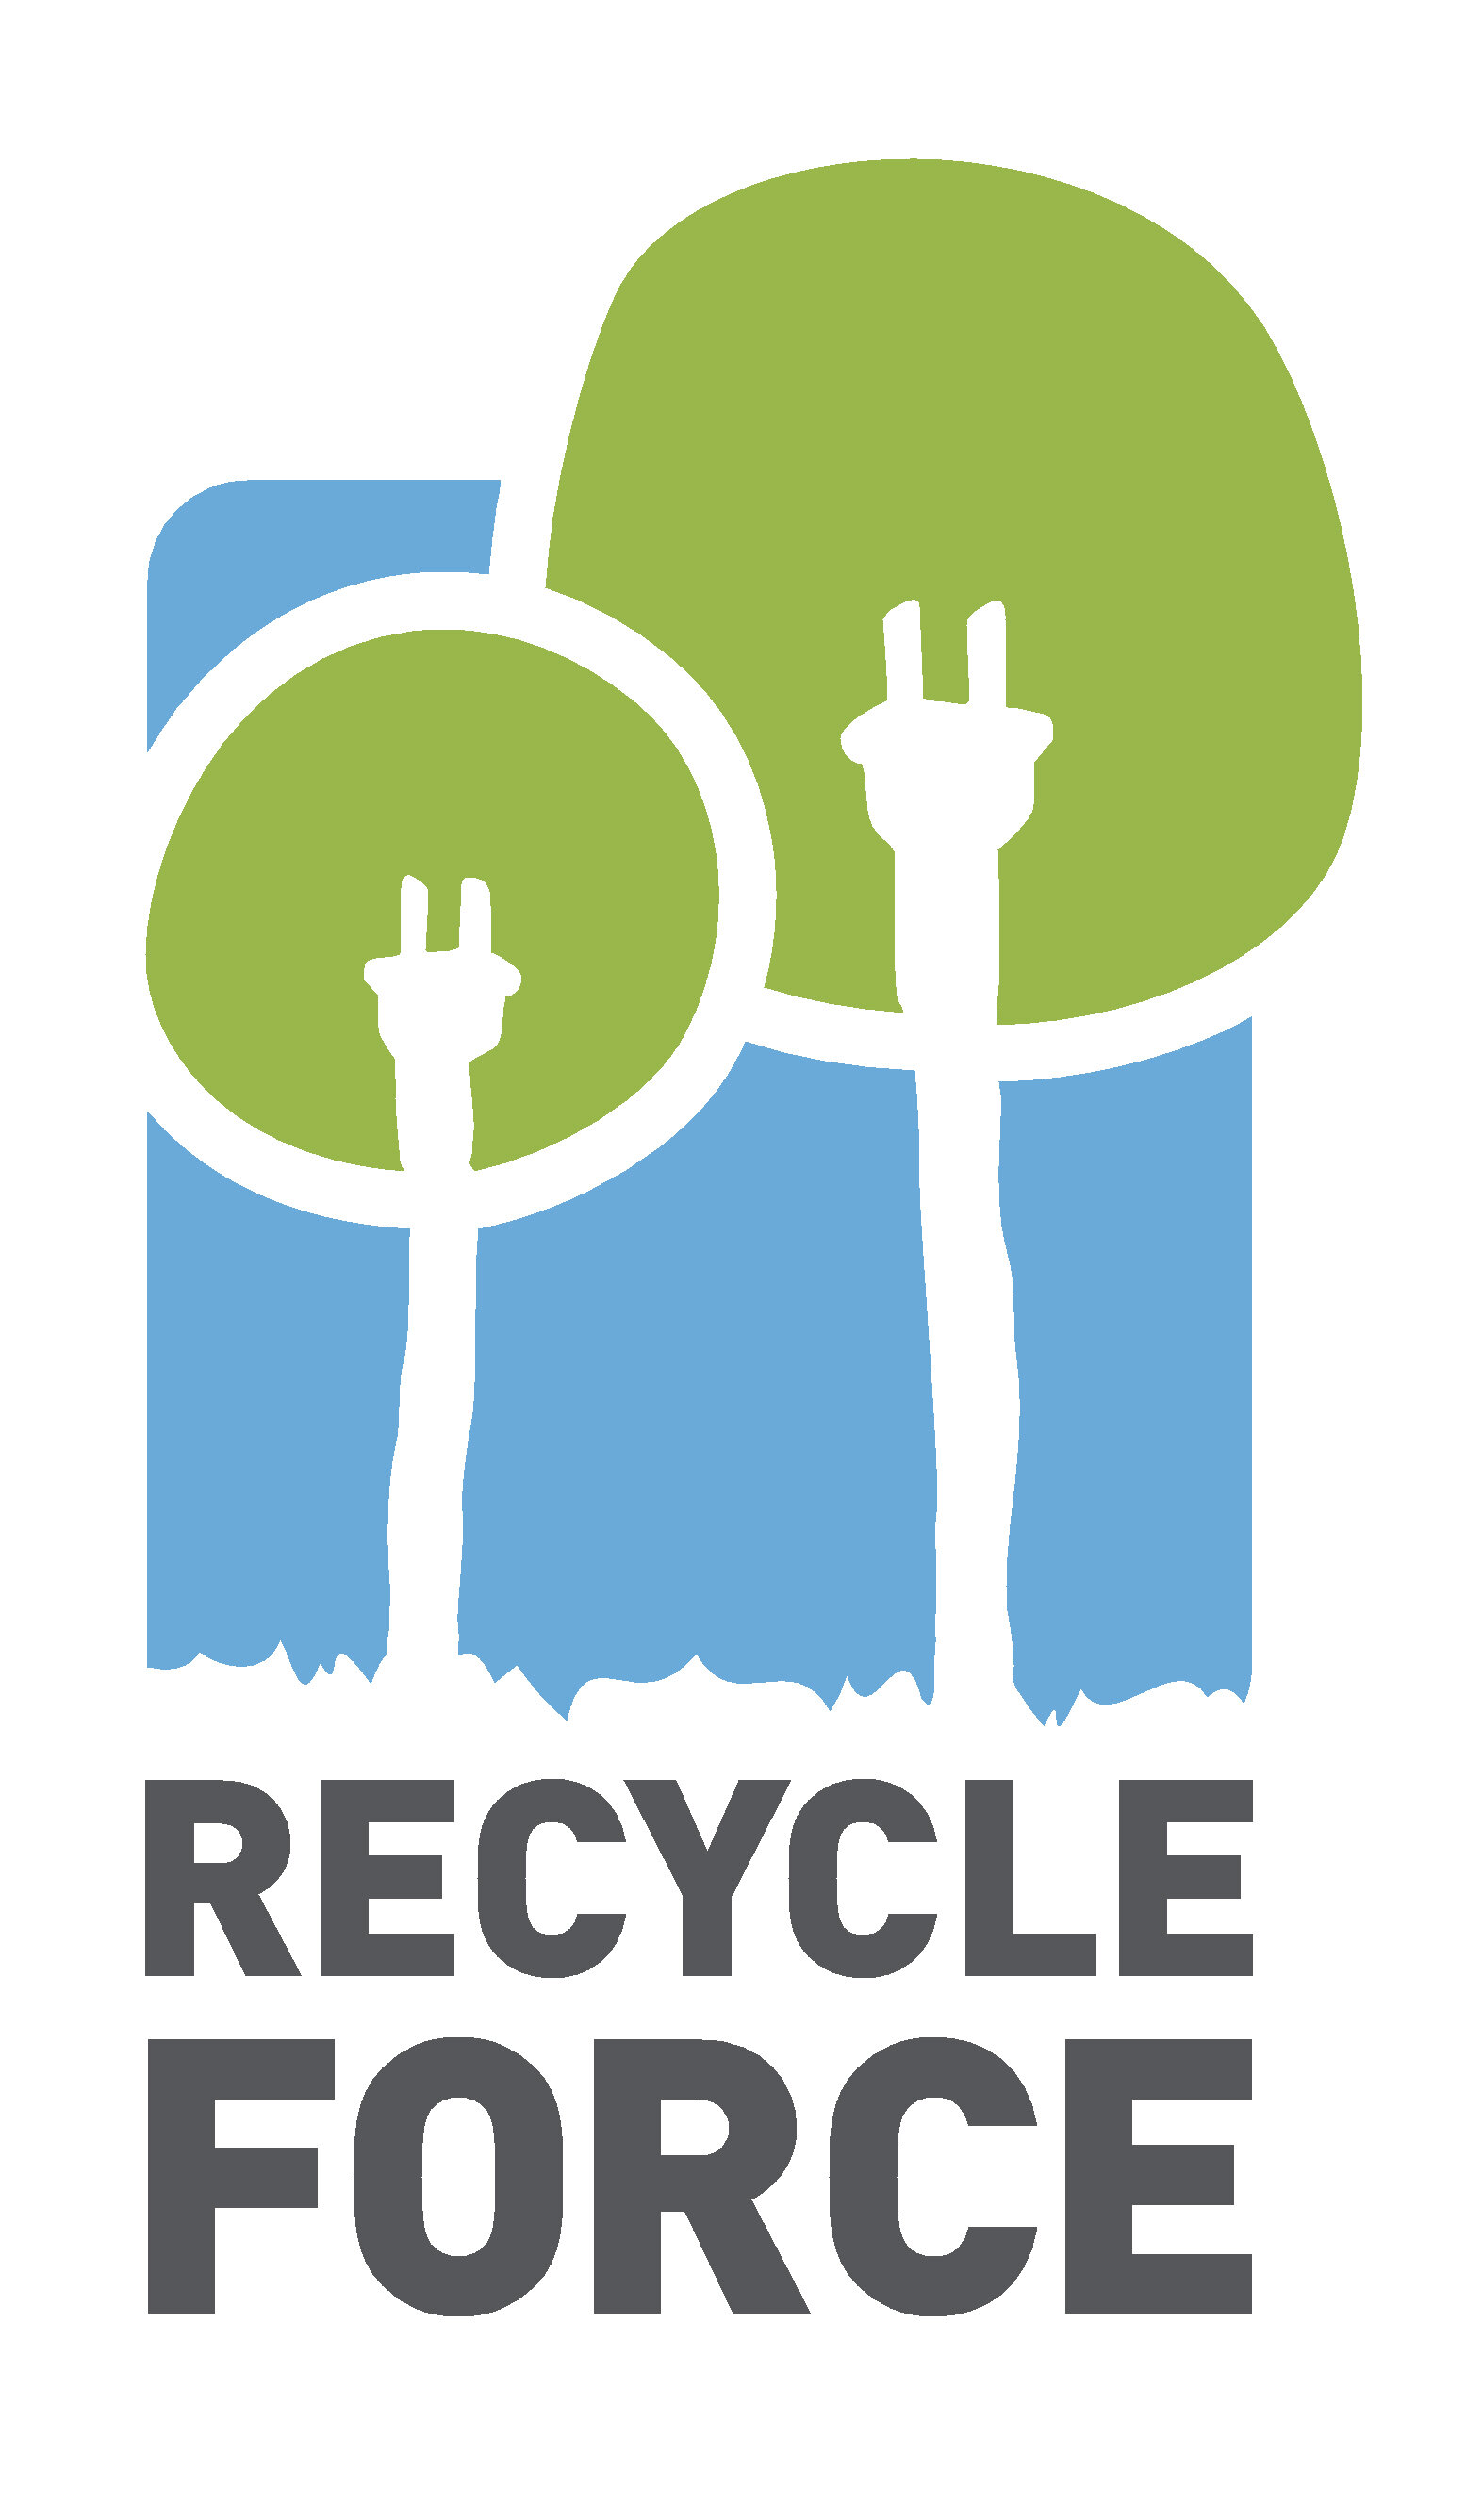 recycleforce logo jpeg.JPG